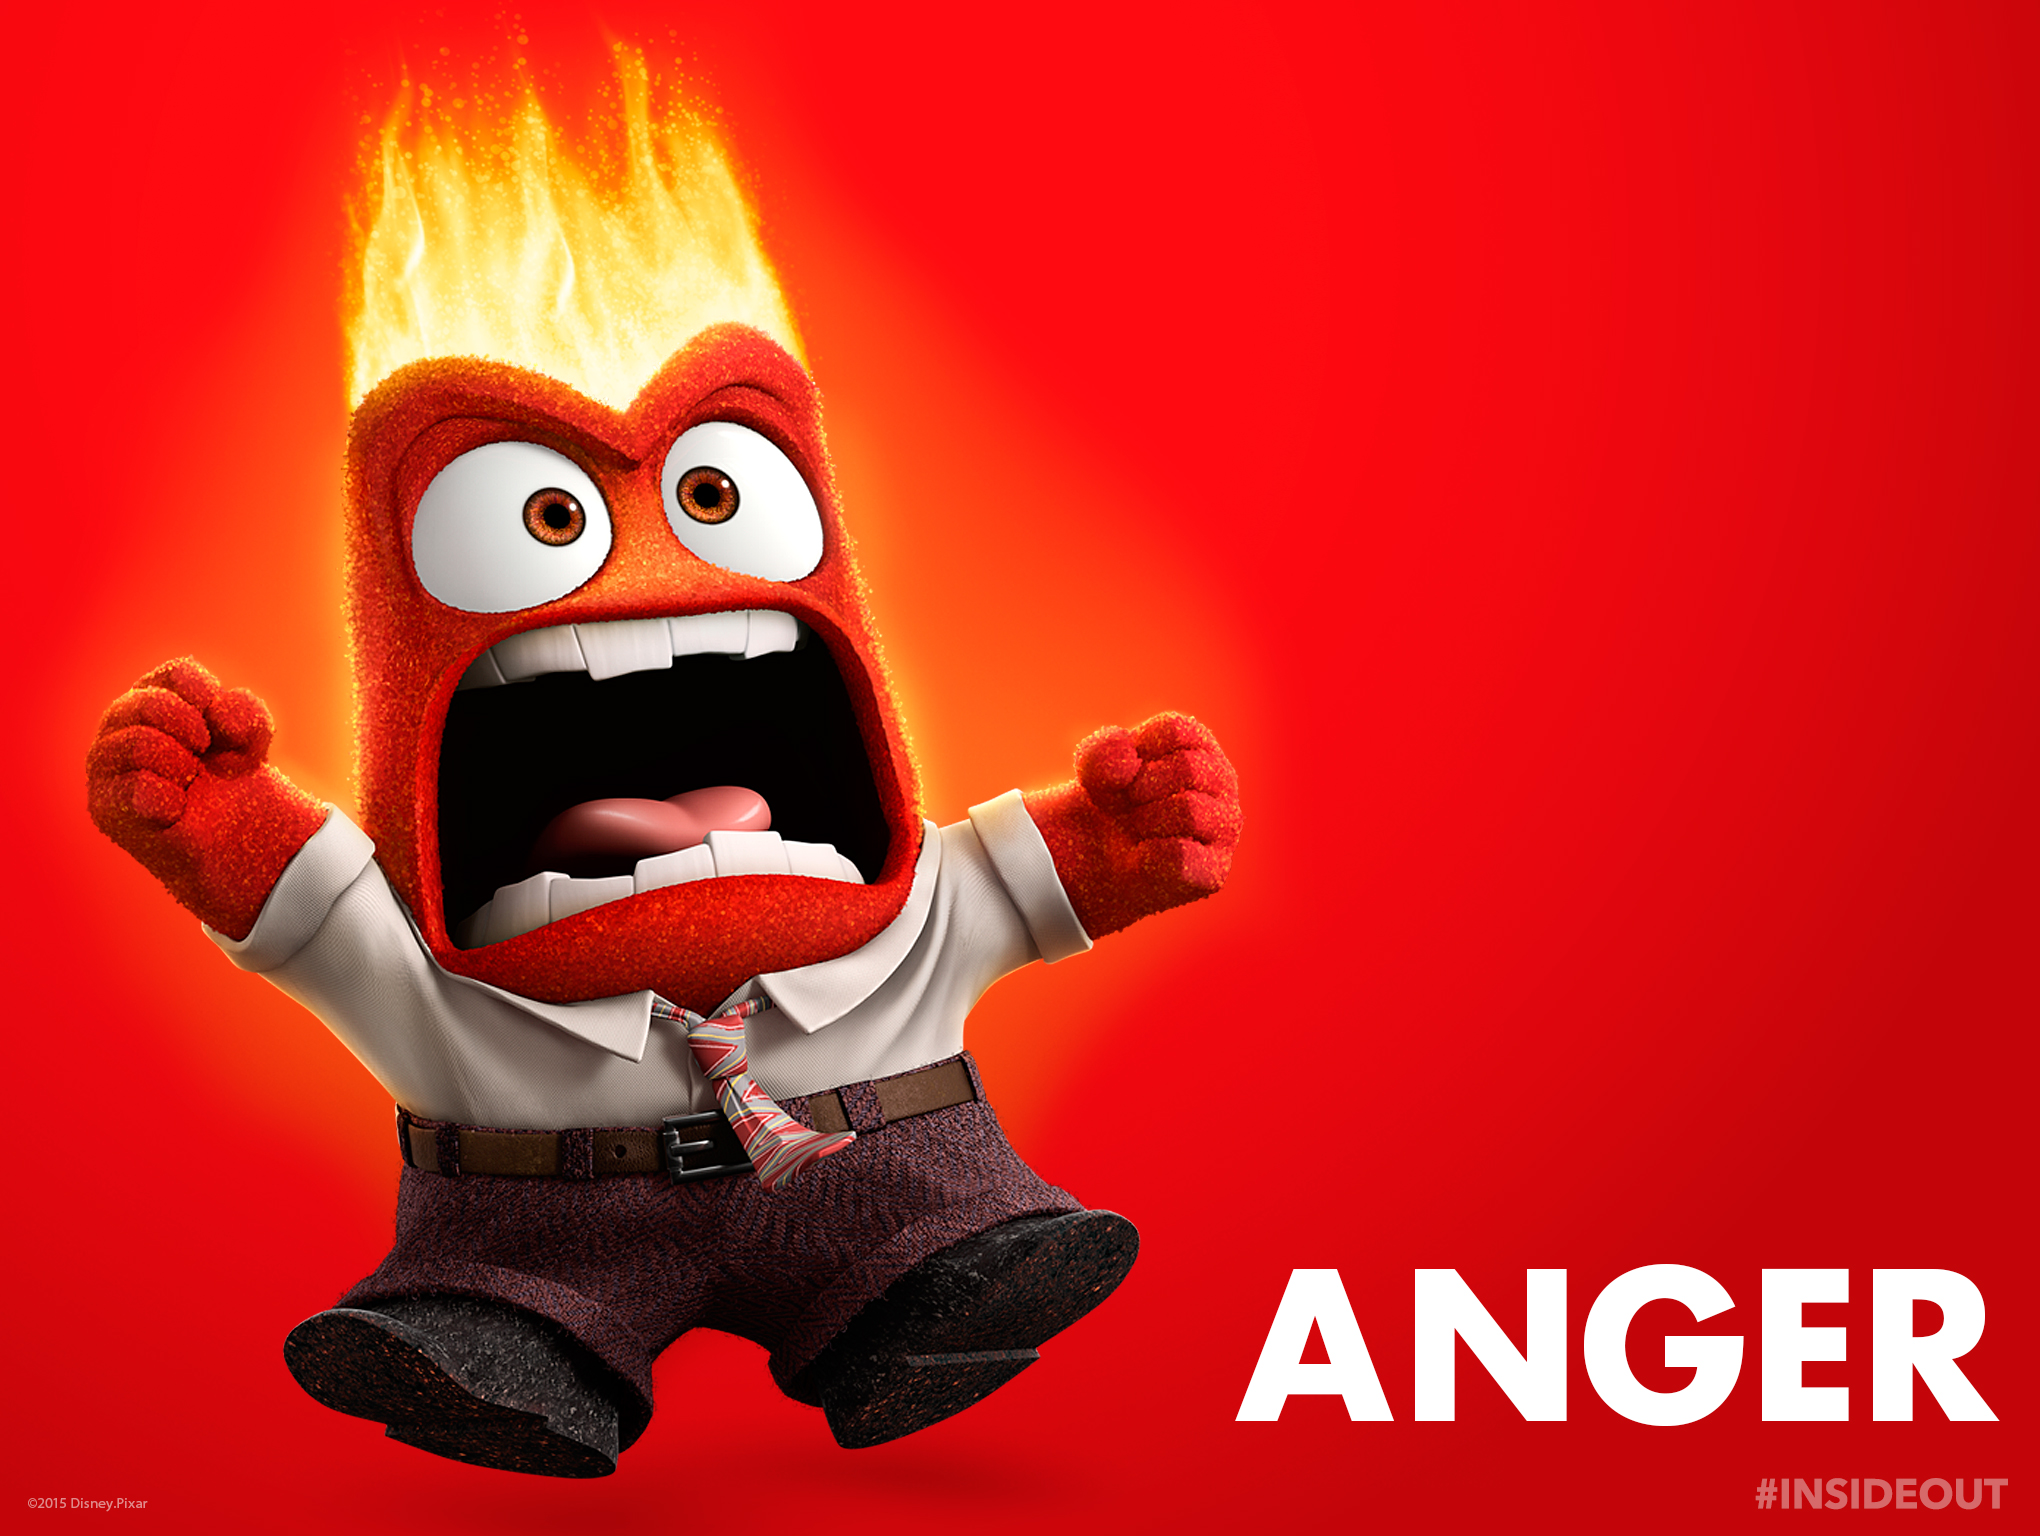 Anger Image